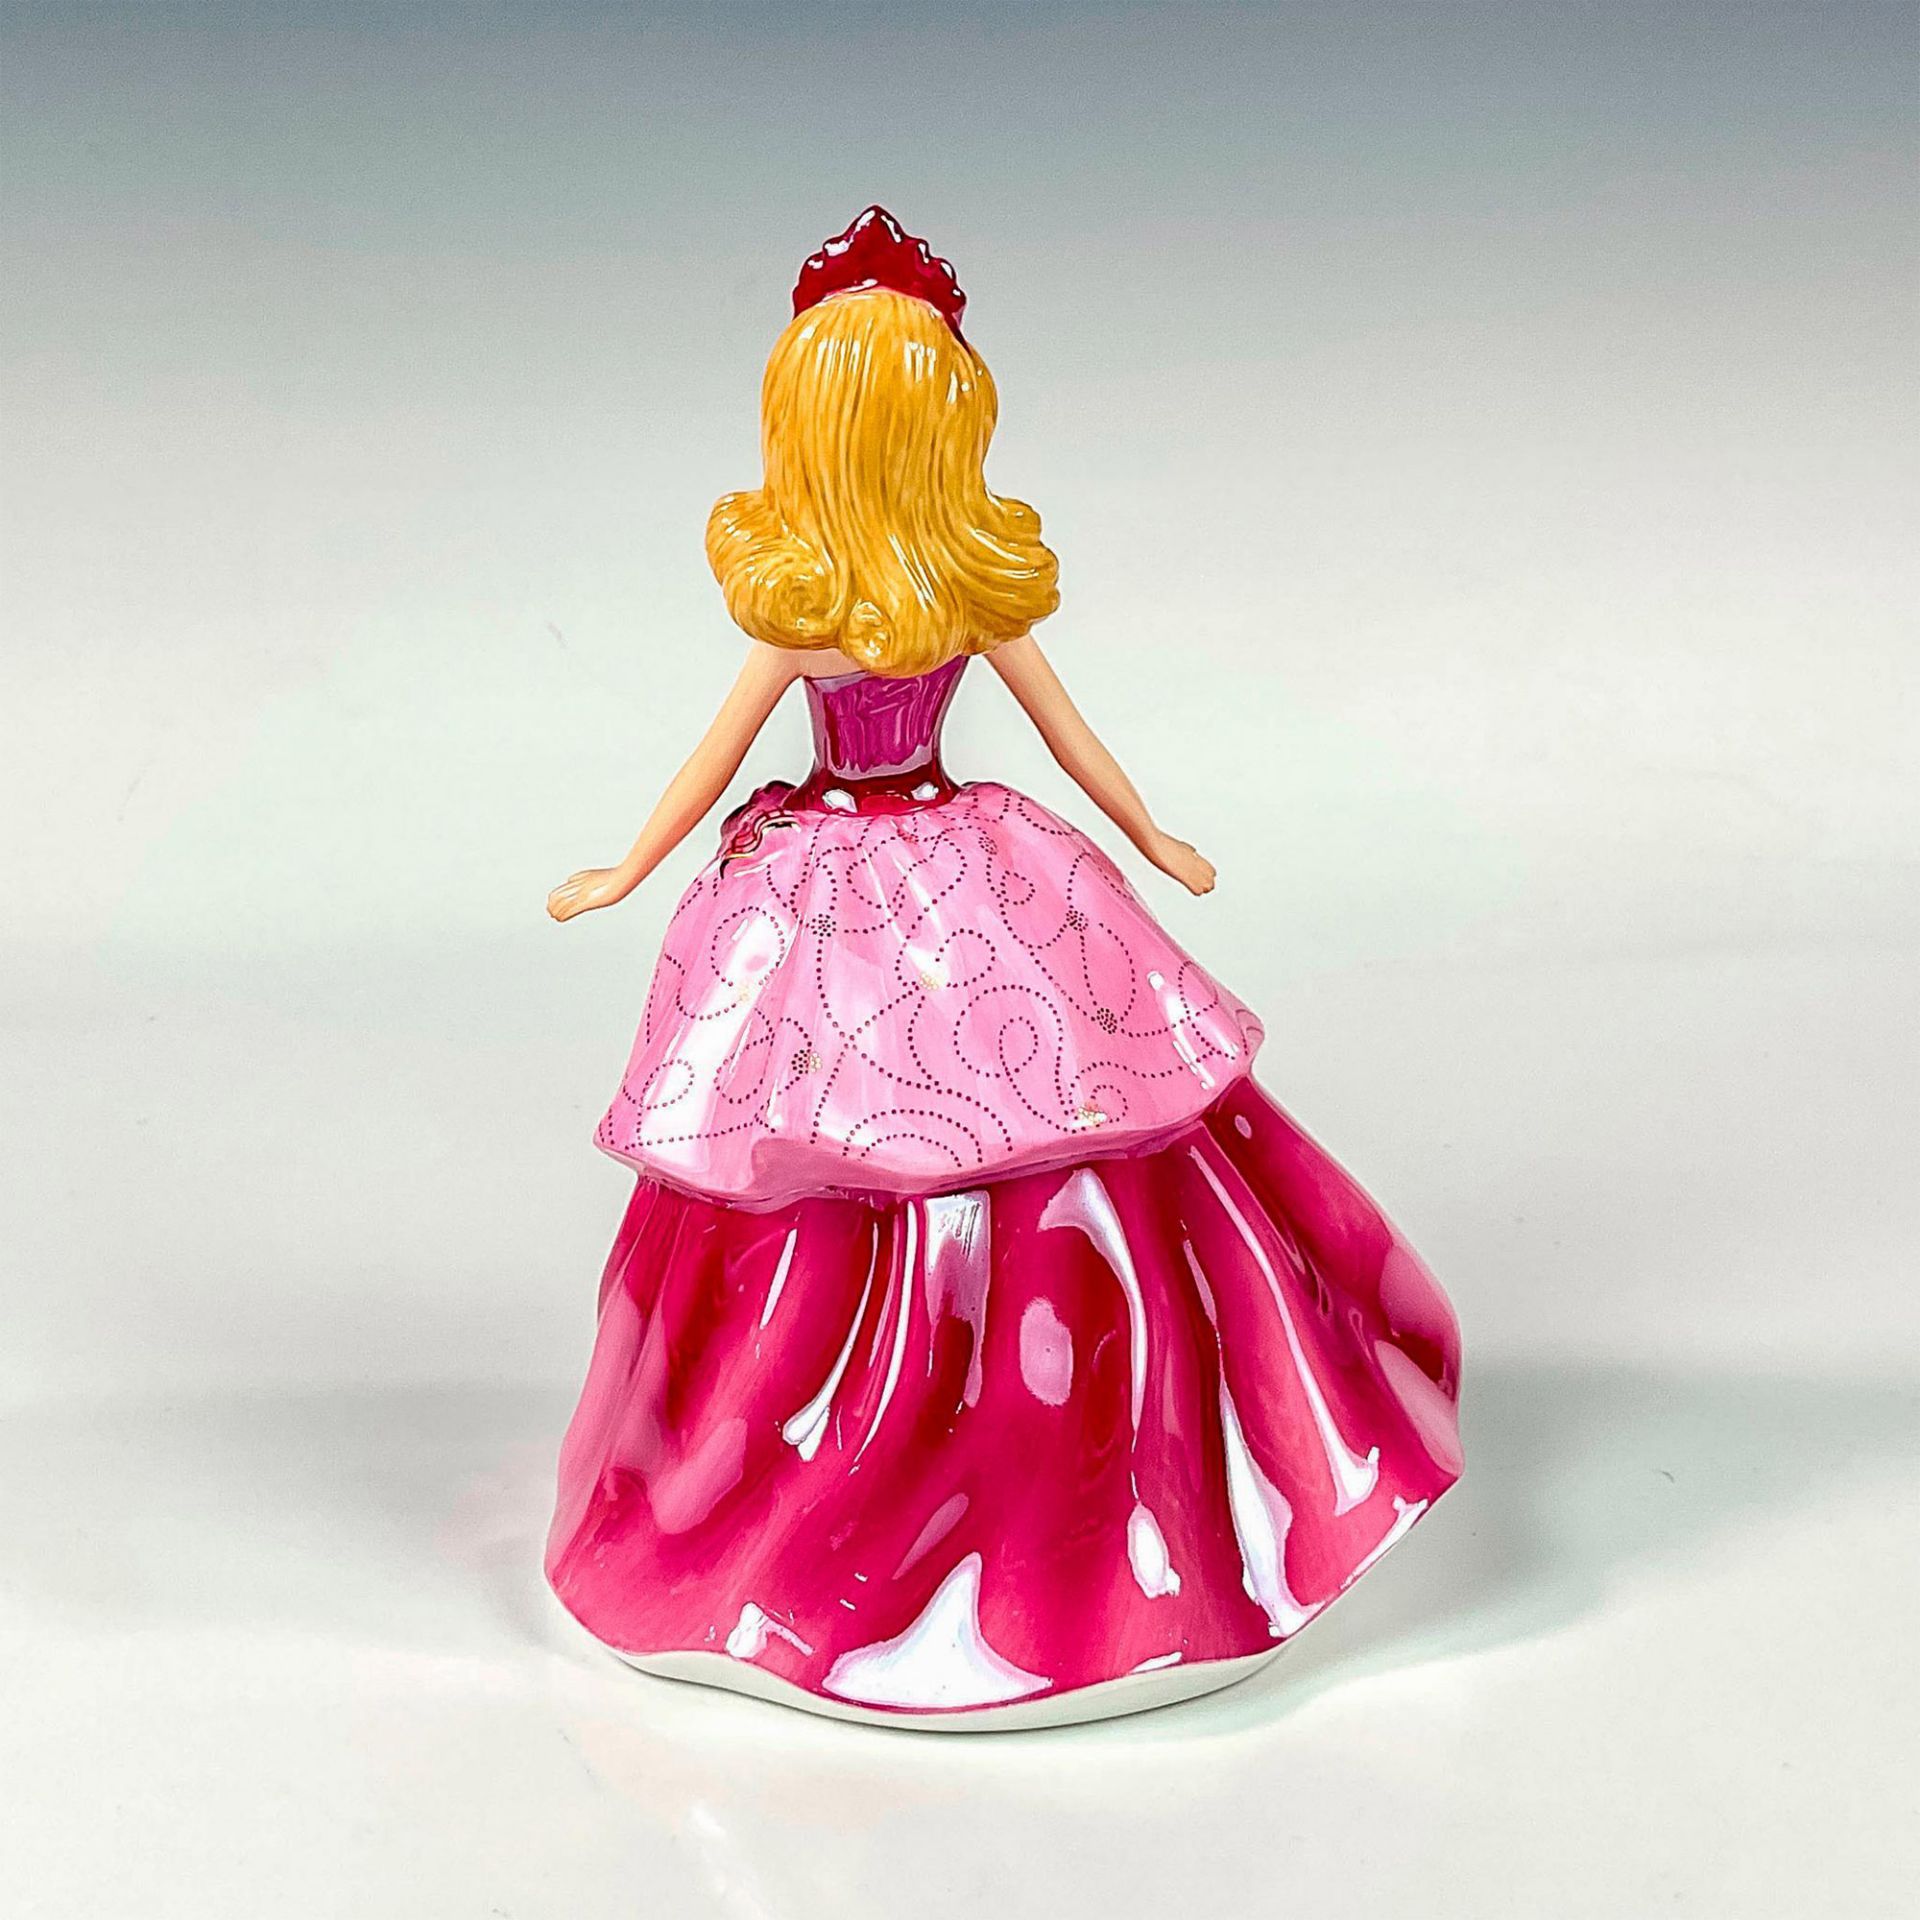 Barbie Princess Charm School HN5610 - Royal Doulton Figurine - Image 2 of 3